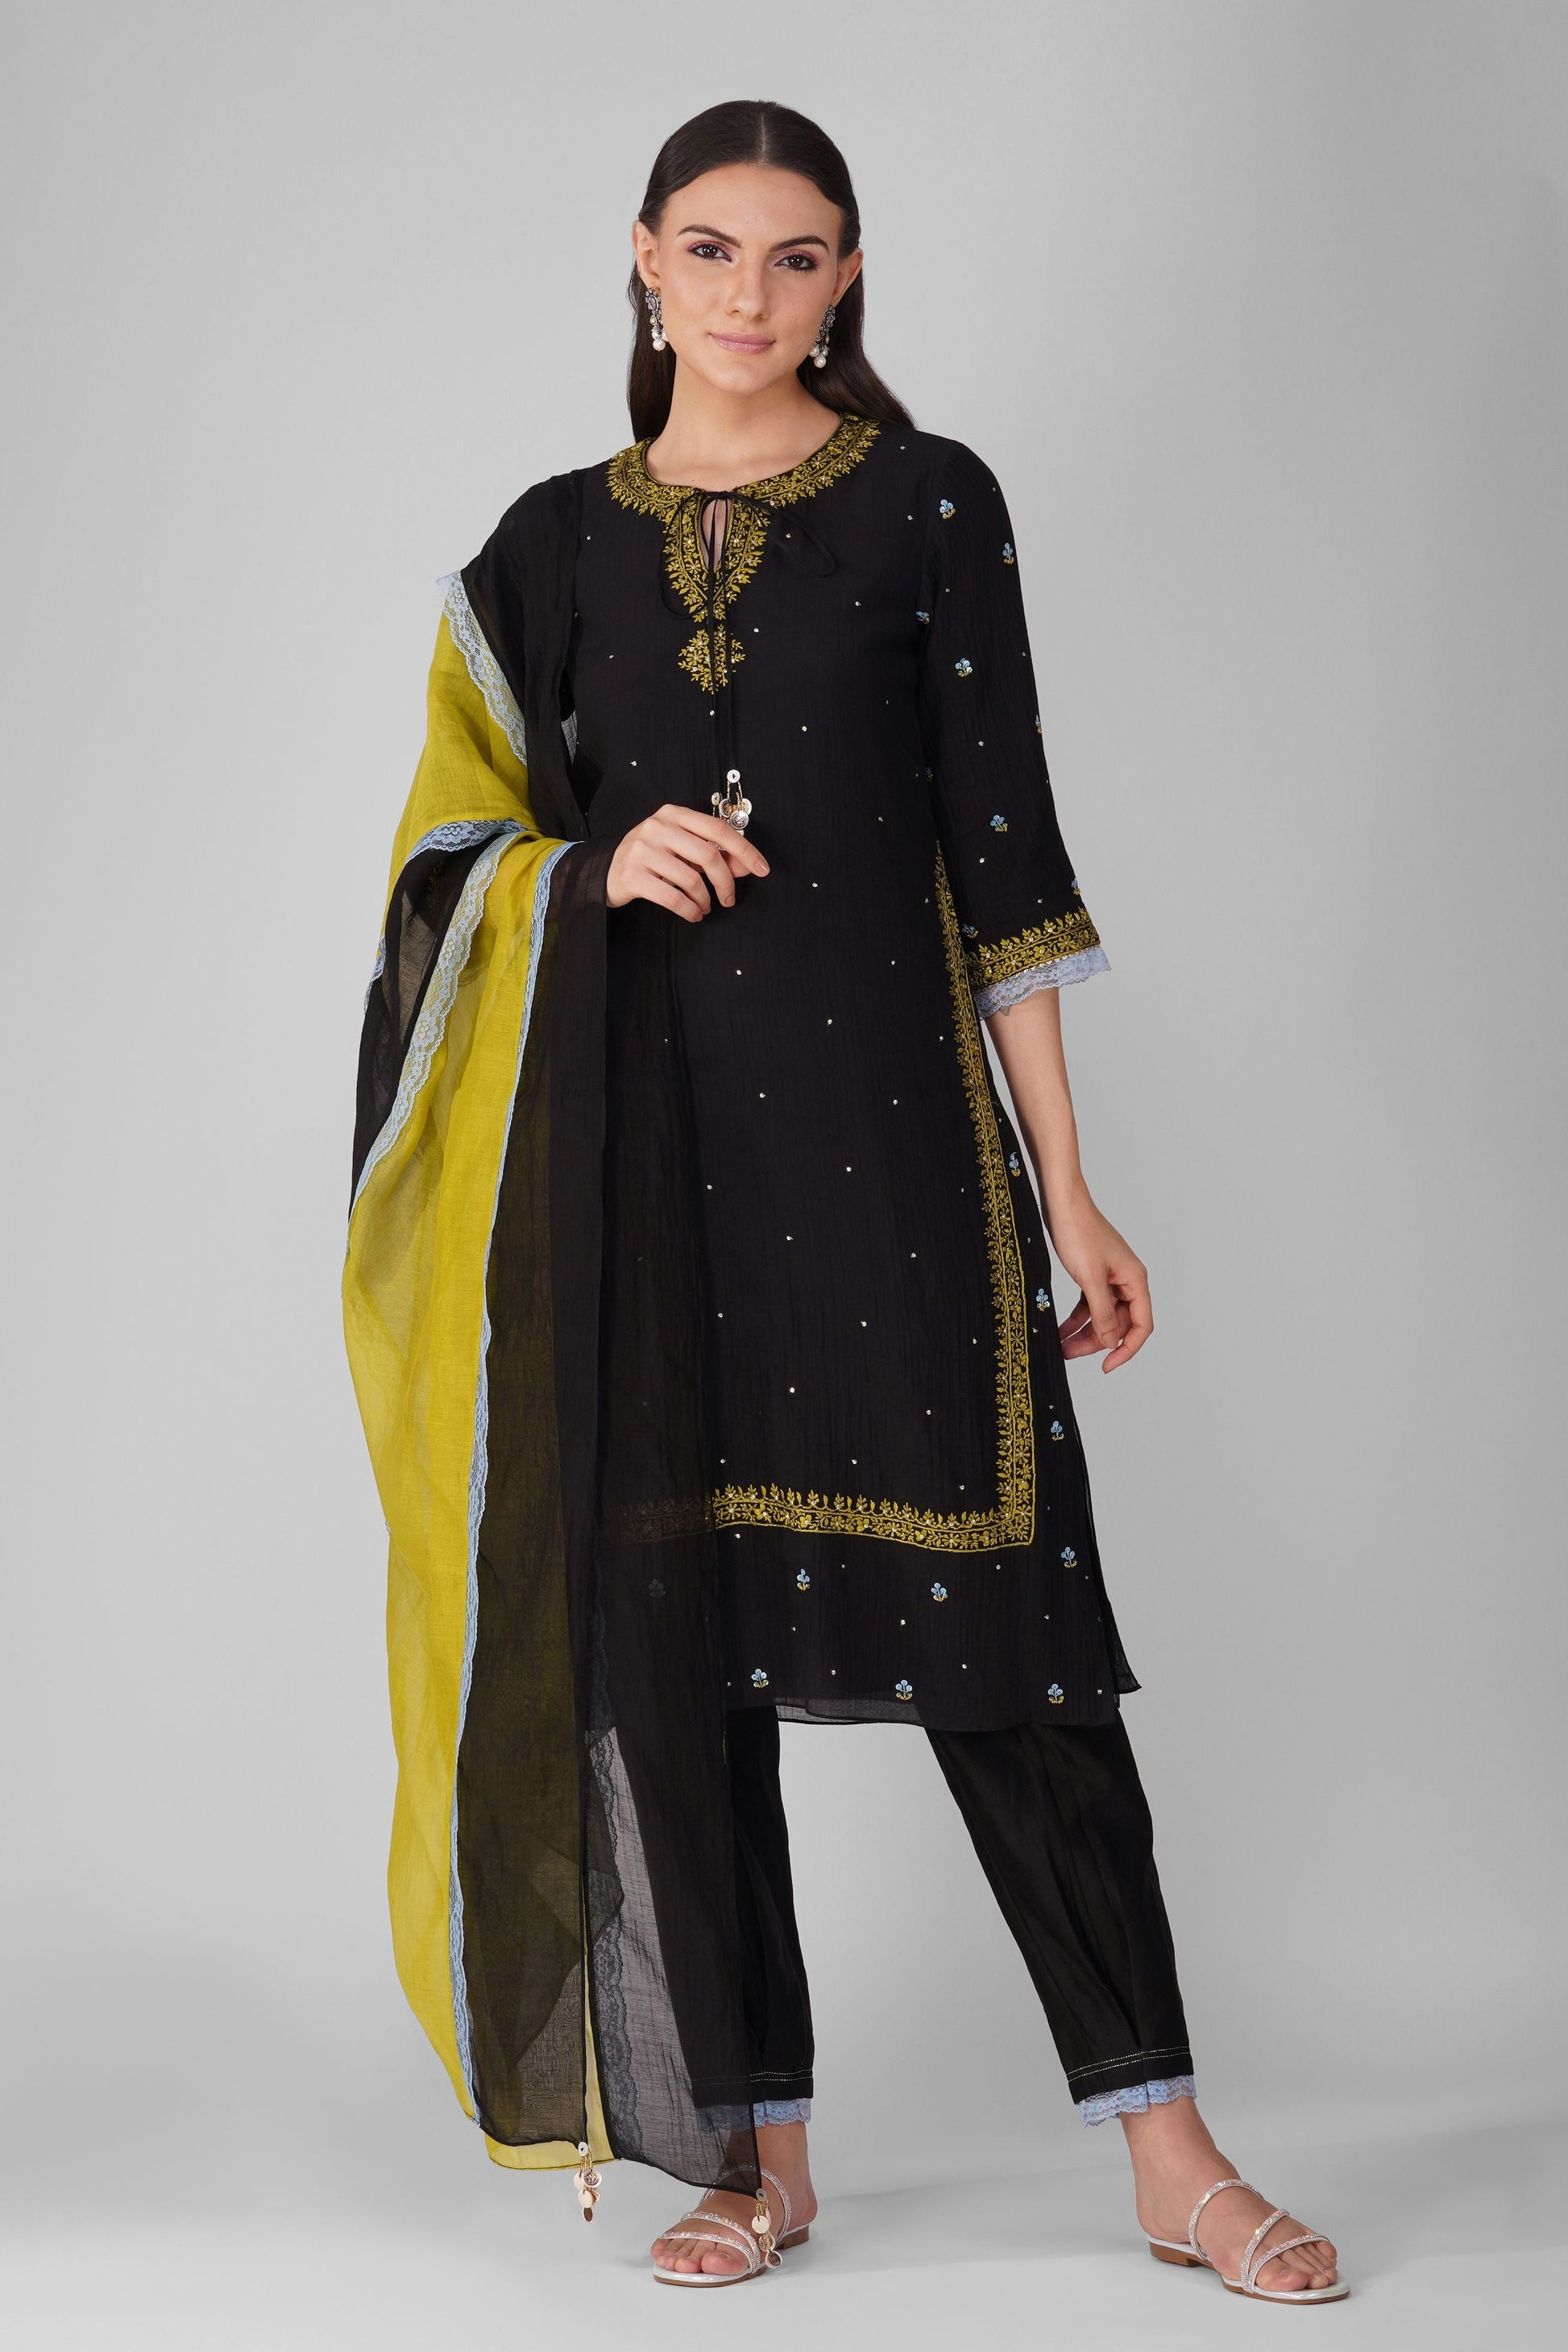 Black Chanderi Kurta Pant set at Kamakhyaa by Devyani Mehrotra. This item is Black, Chanderi, Embellished, Indian Wear, Natural, Party Wear, Regular Fit, Womenswear